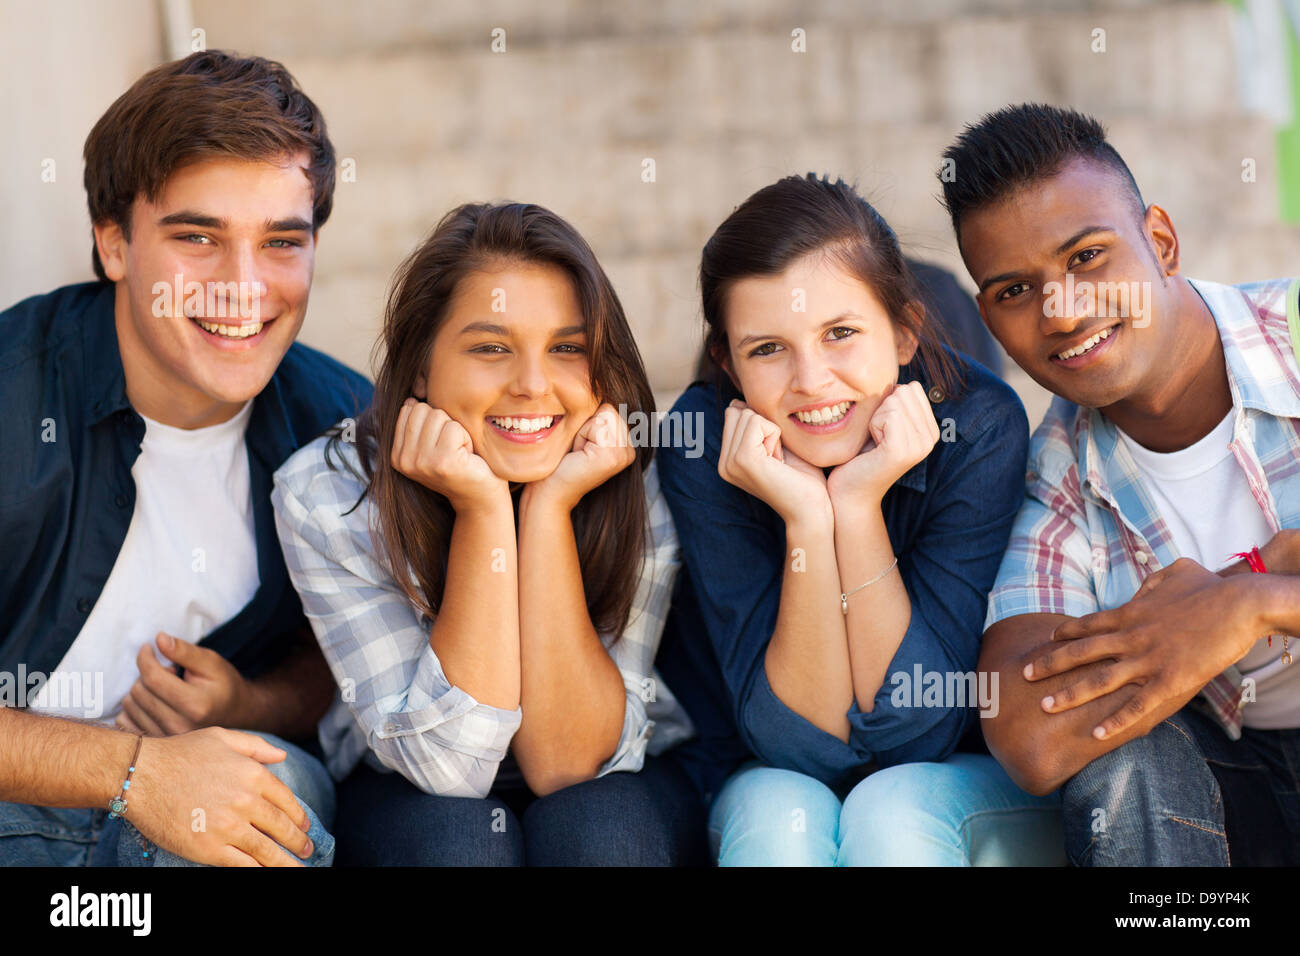 portrait of happy high school students outdoors Stock Photo